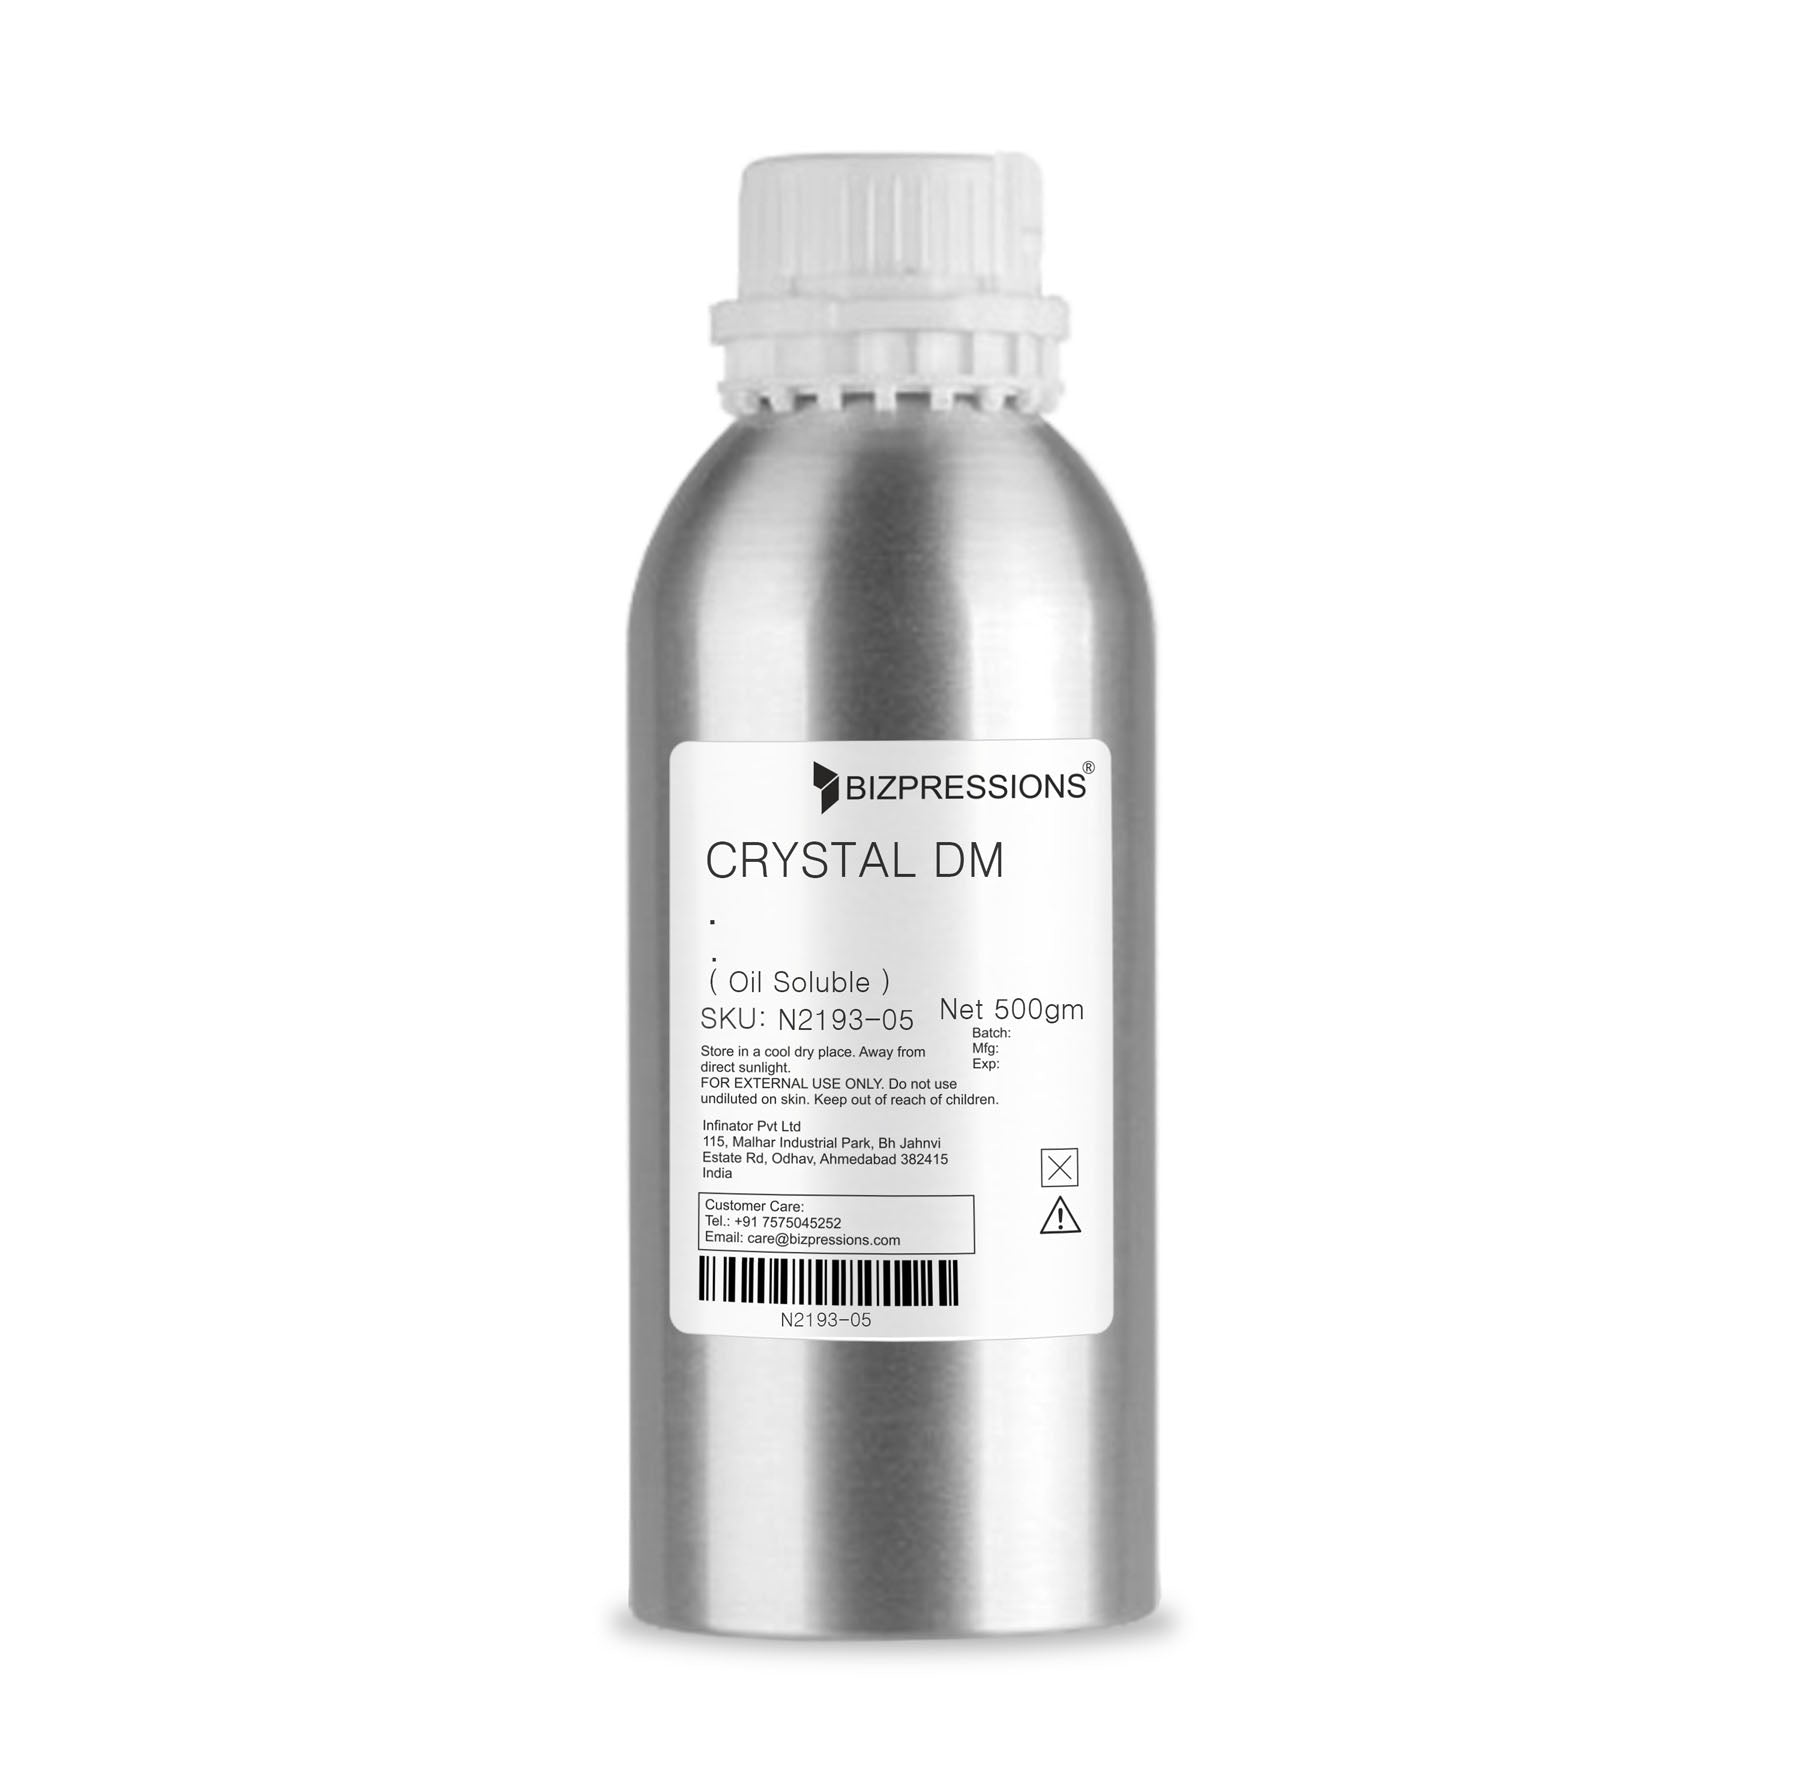 CRYSTAL DM - Fragrance ( Oil Soluble ) - 500 gm